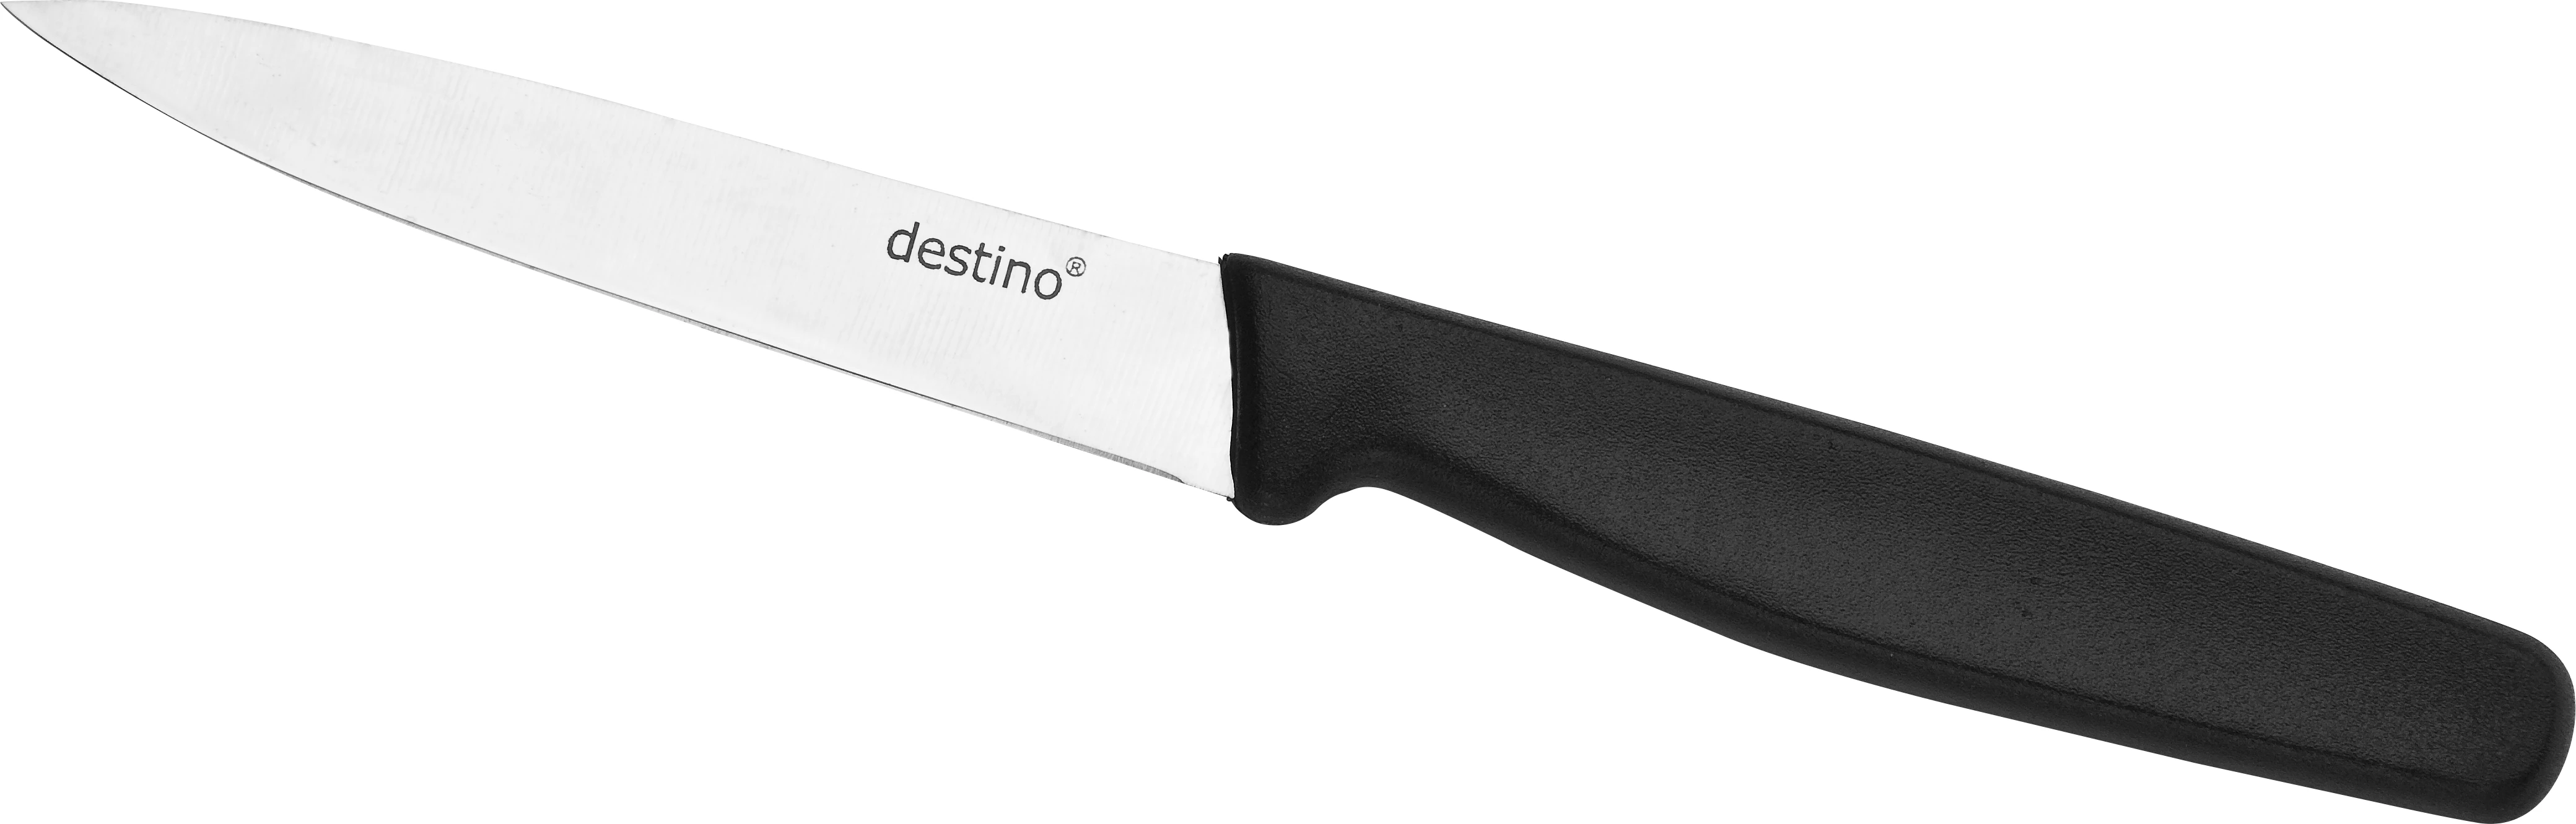 Destino spækkekniv med plastgreb, 10 cm